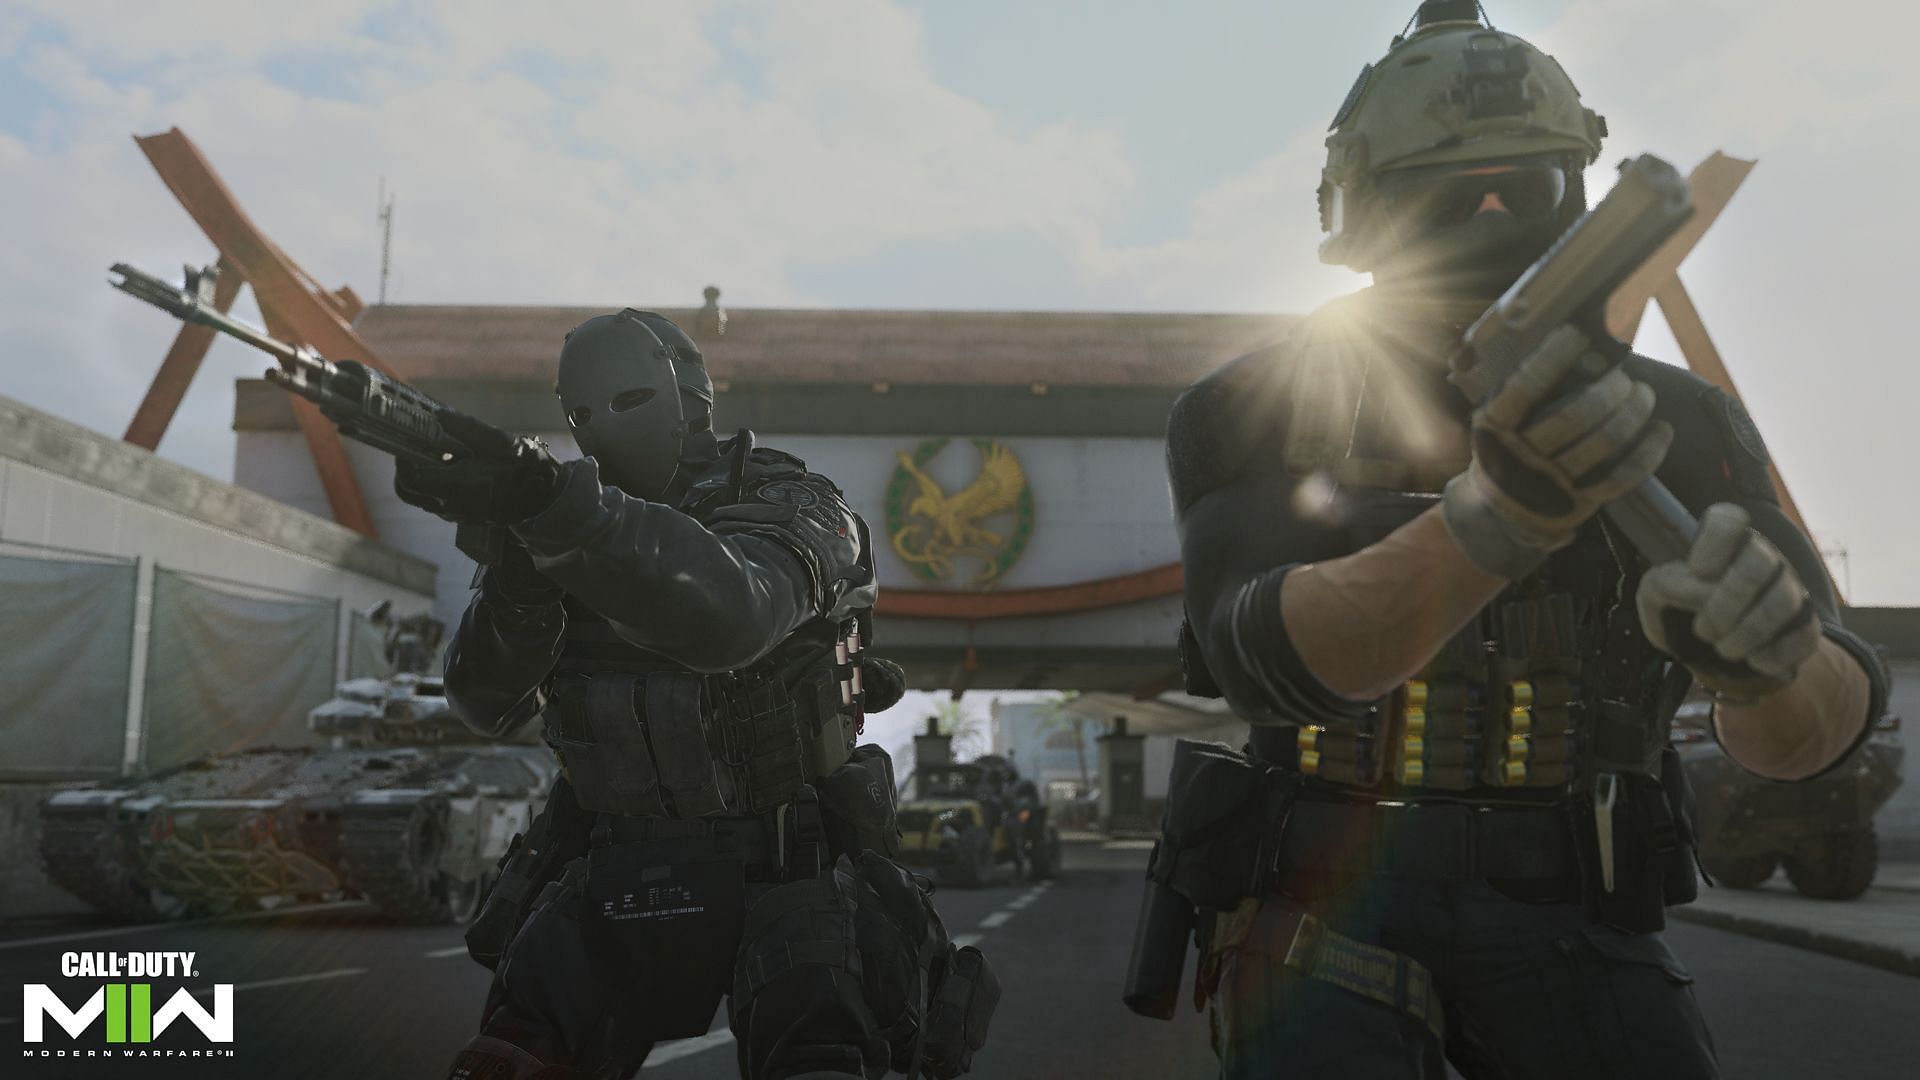 A new era arrives: Call of Duty Modern Warfare 2 and Warzone 2.0